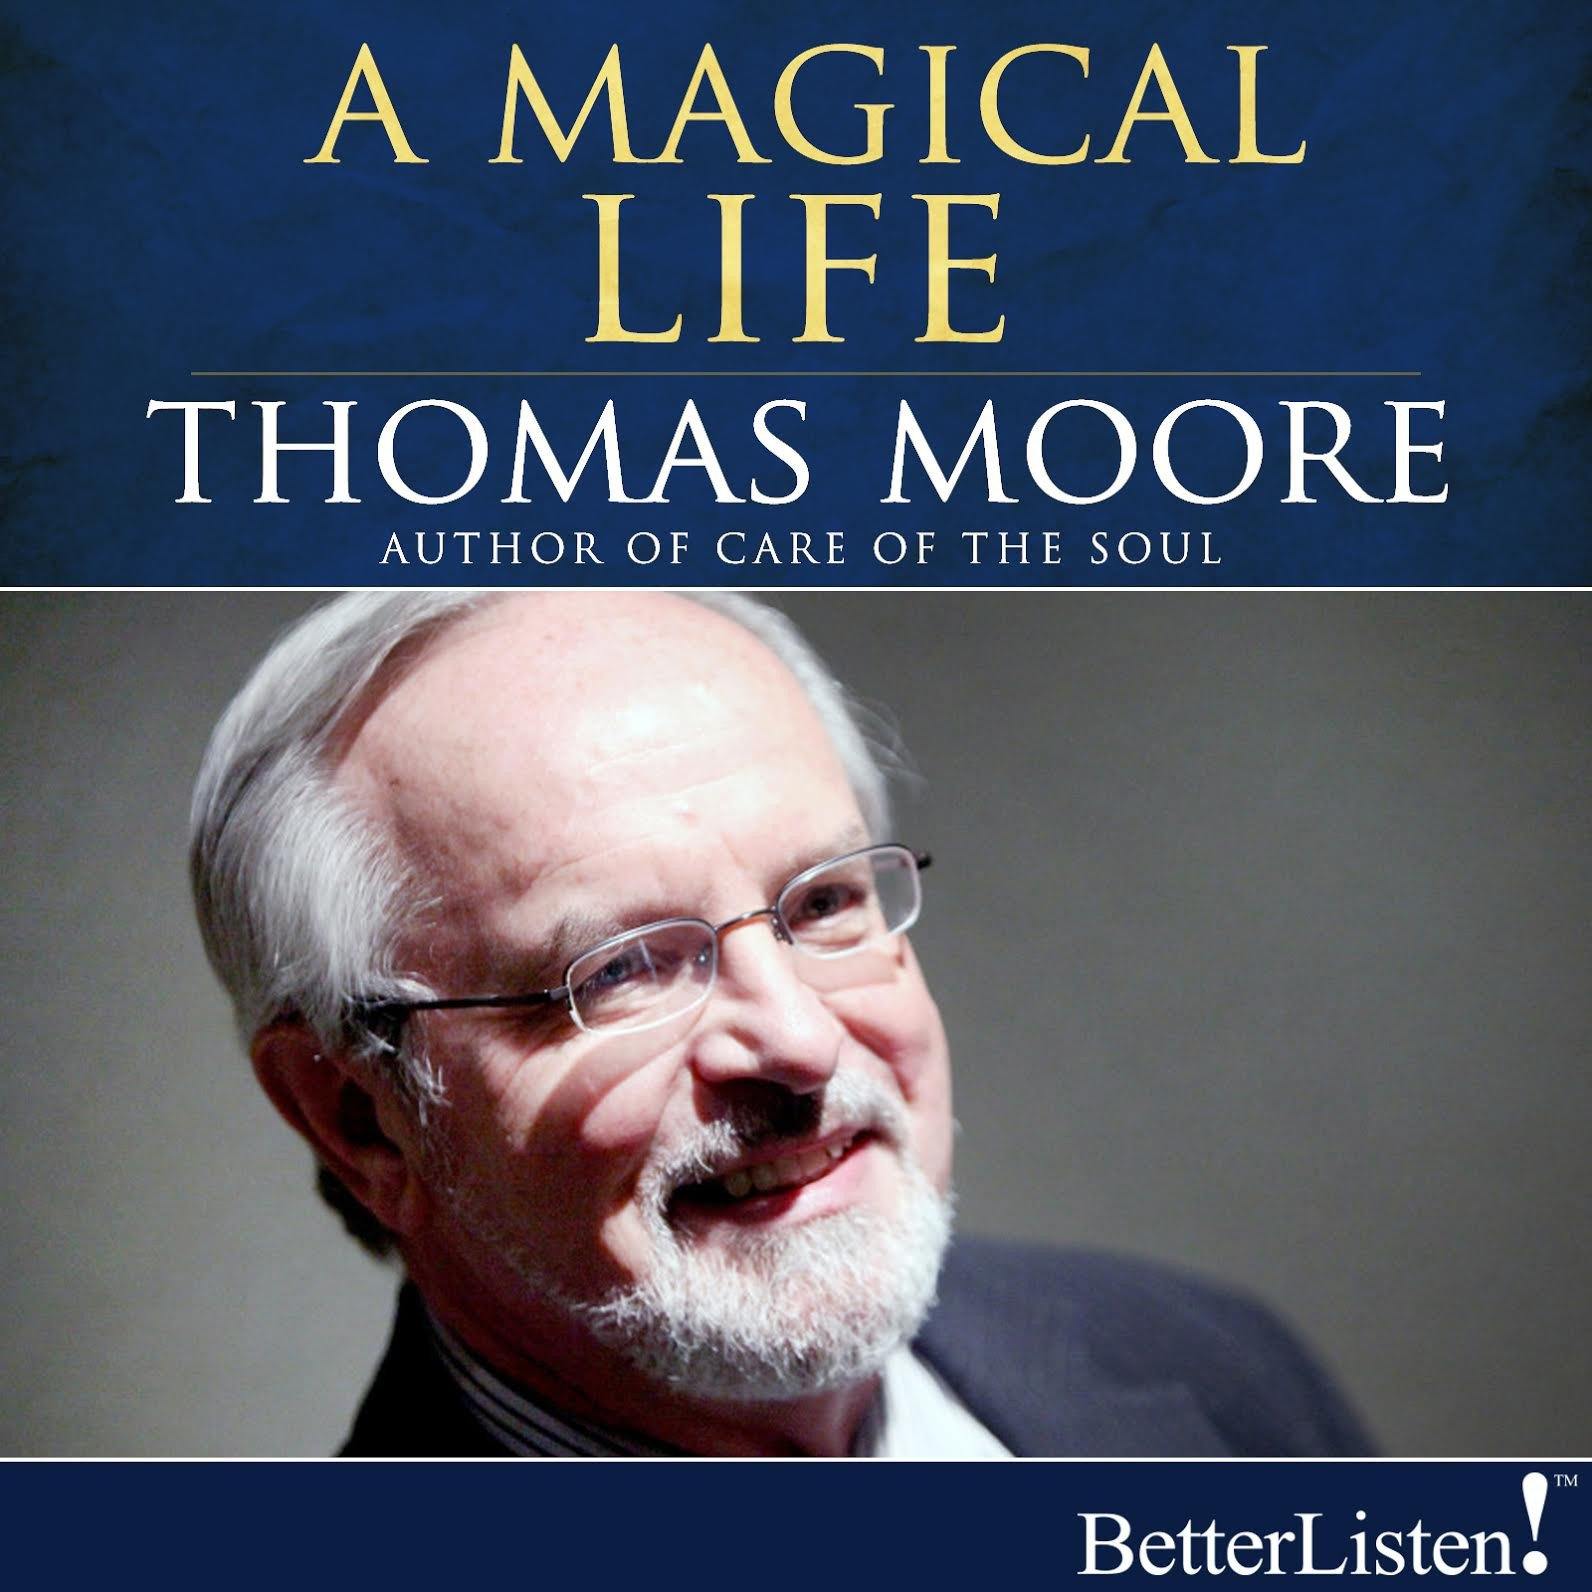 A Magical Life by Thomas Moore Audio Program Thomas Moore - BetterListen!